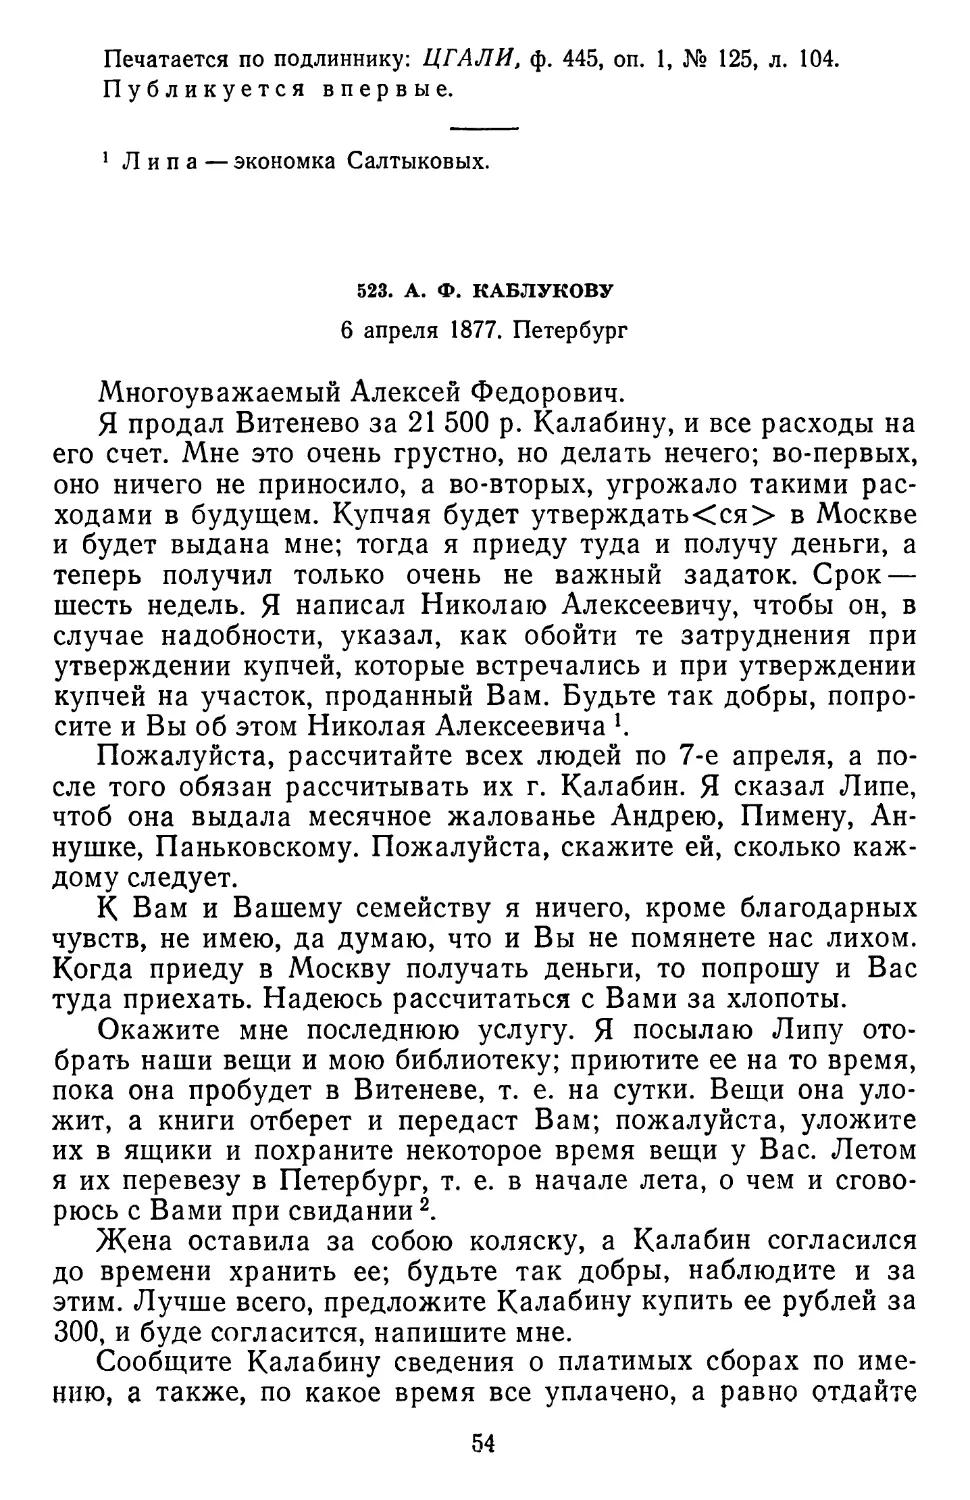 523.А.Ф. Каблукову. 6 апреля 1877.Петербург